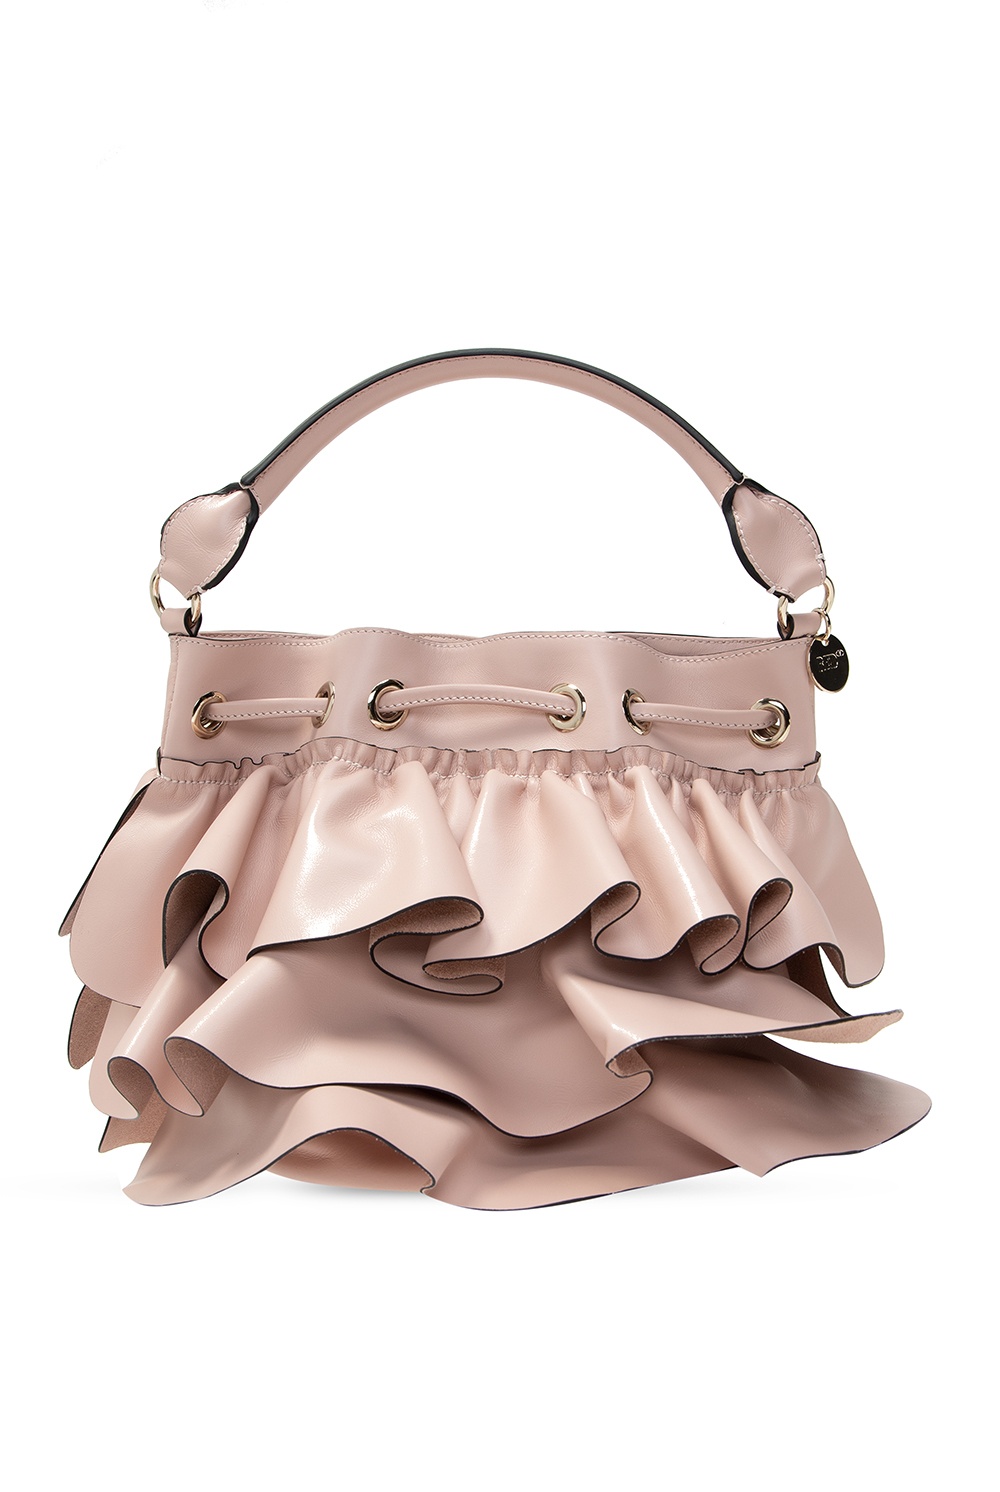 REDValentino ROCK RUFFLES XL BUCKET BAG - Shoulder Bag for Women